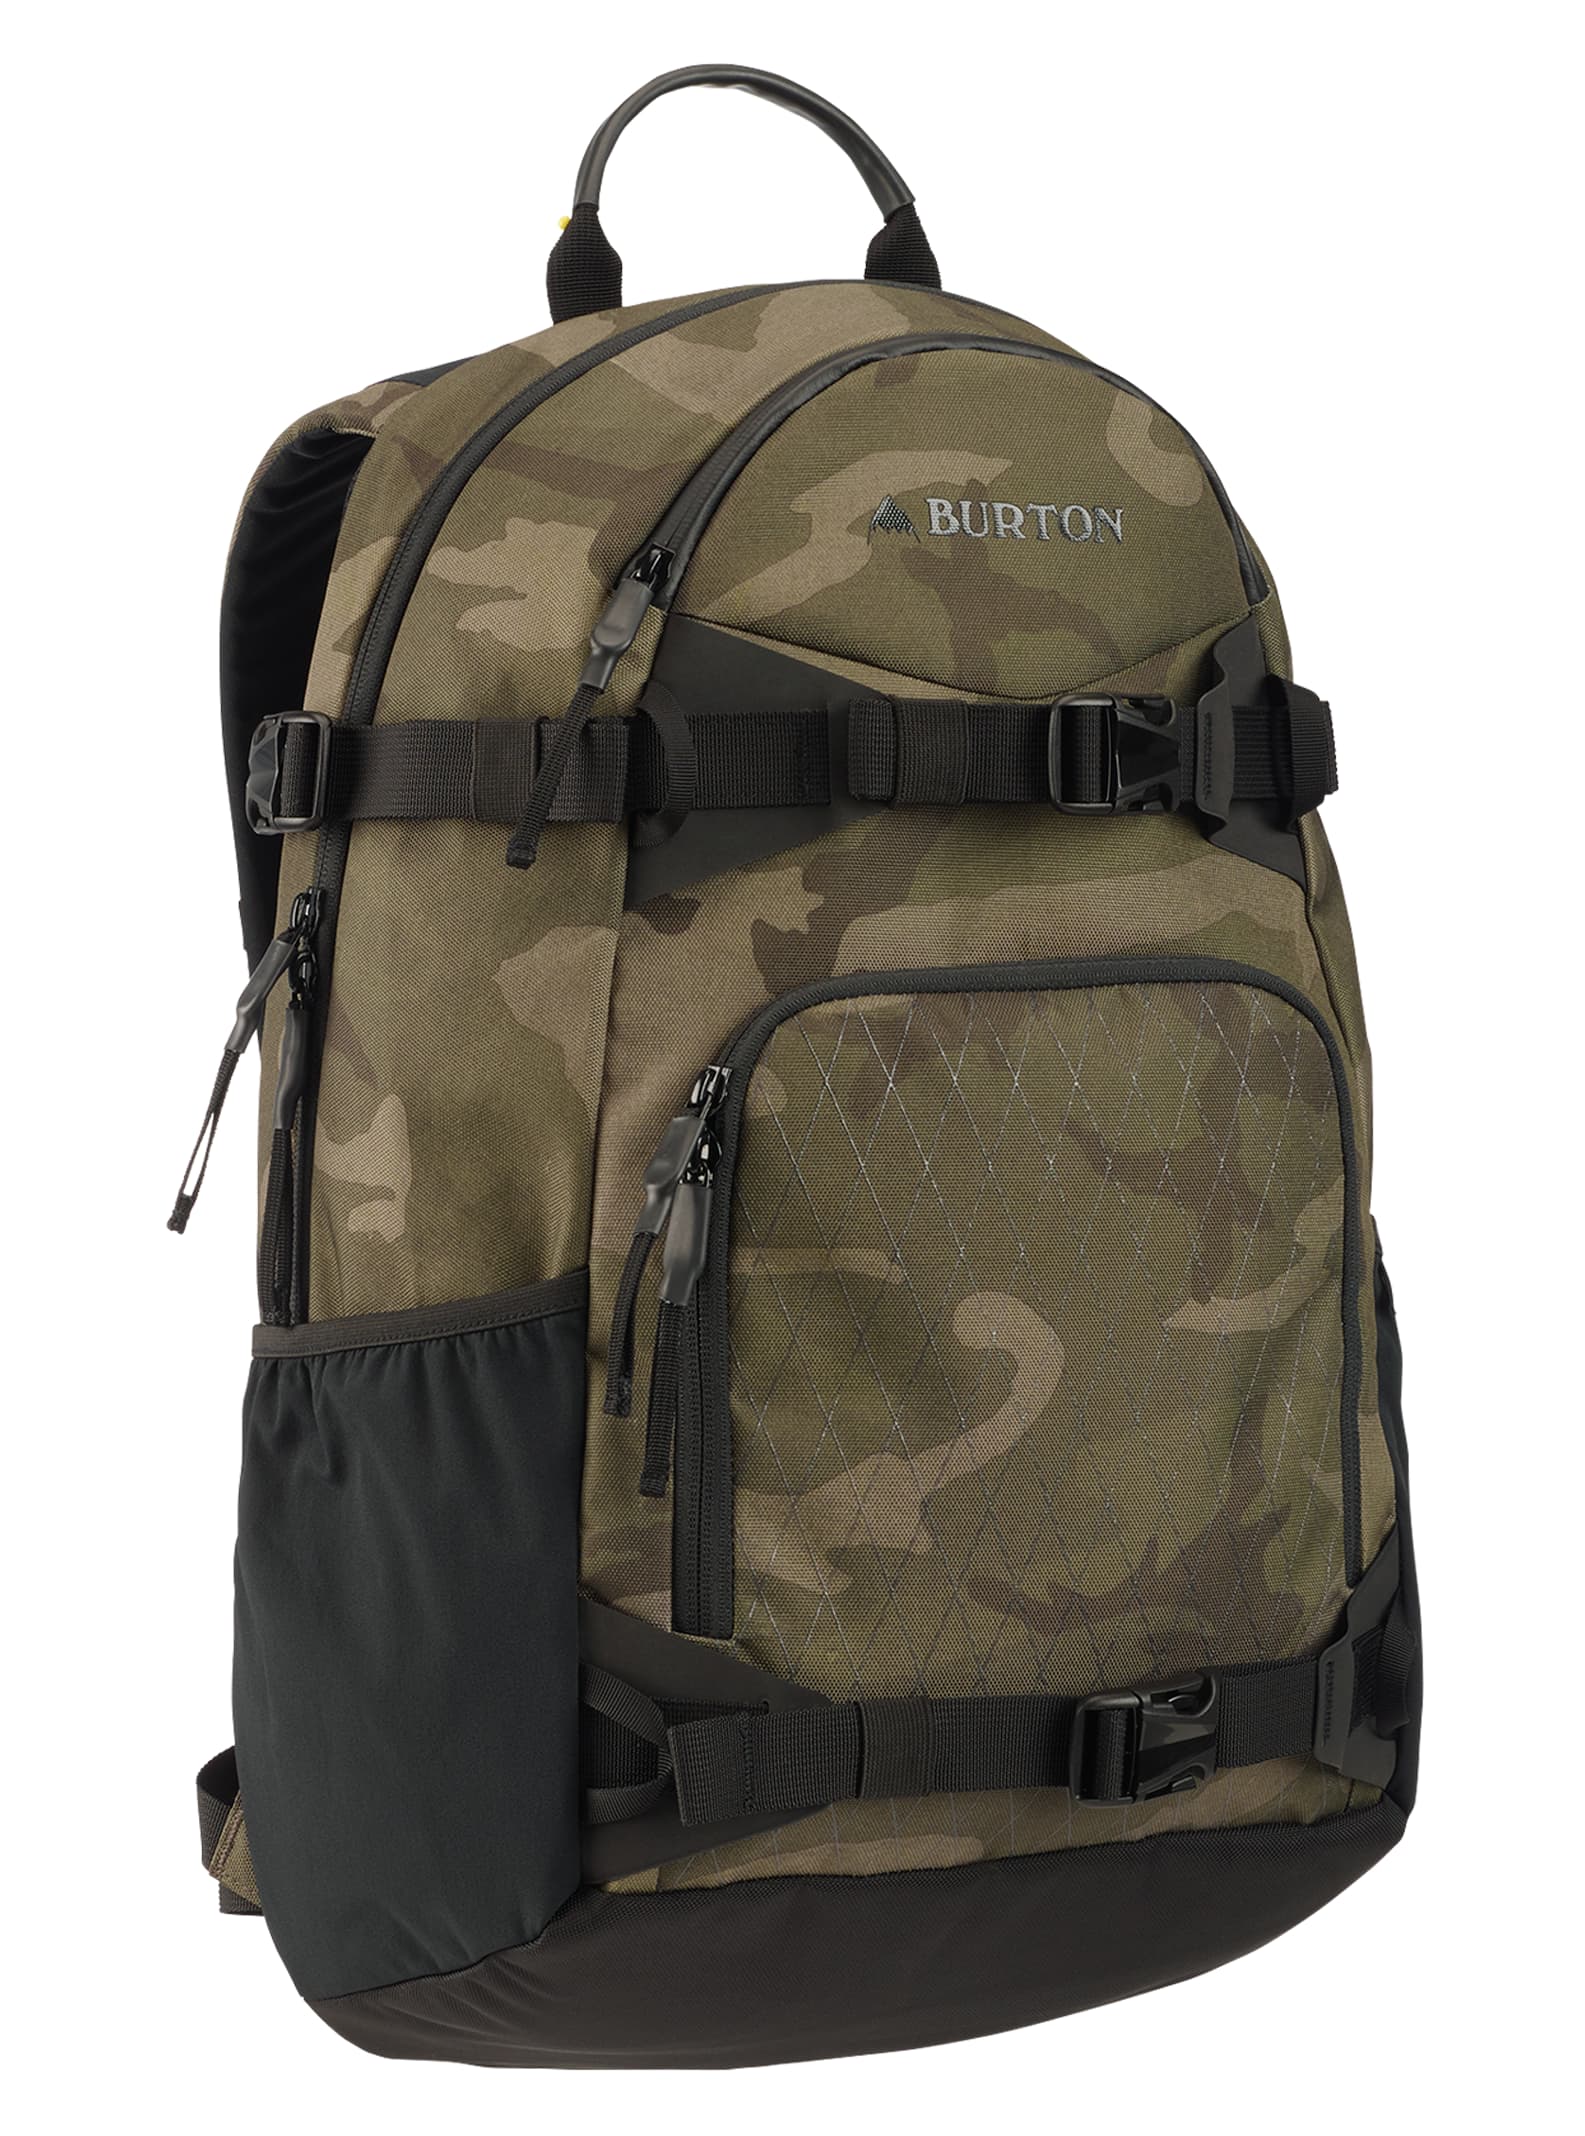 Burton Rider's 25L Backpack | Burton.com Winter 2020 ES